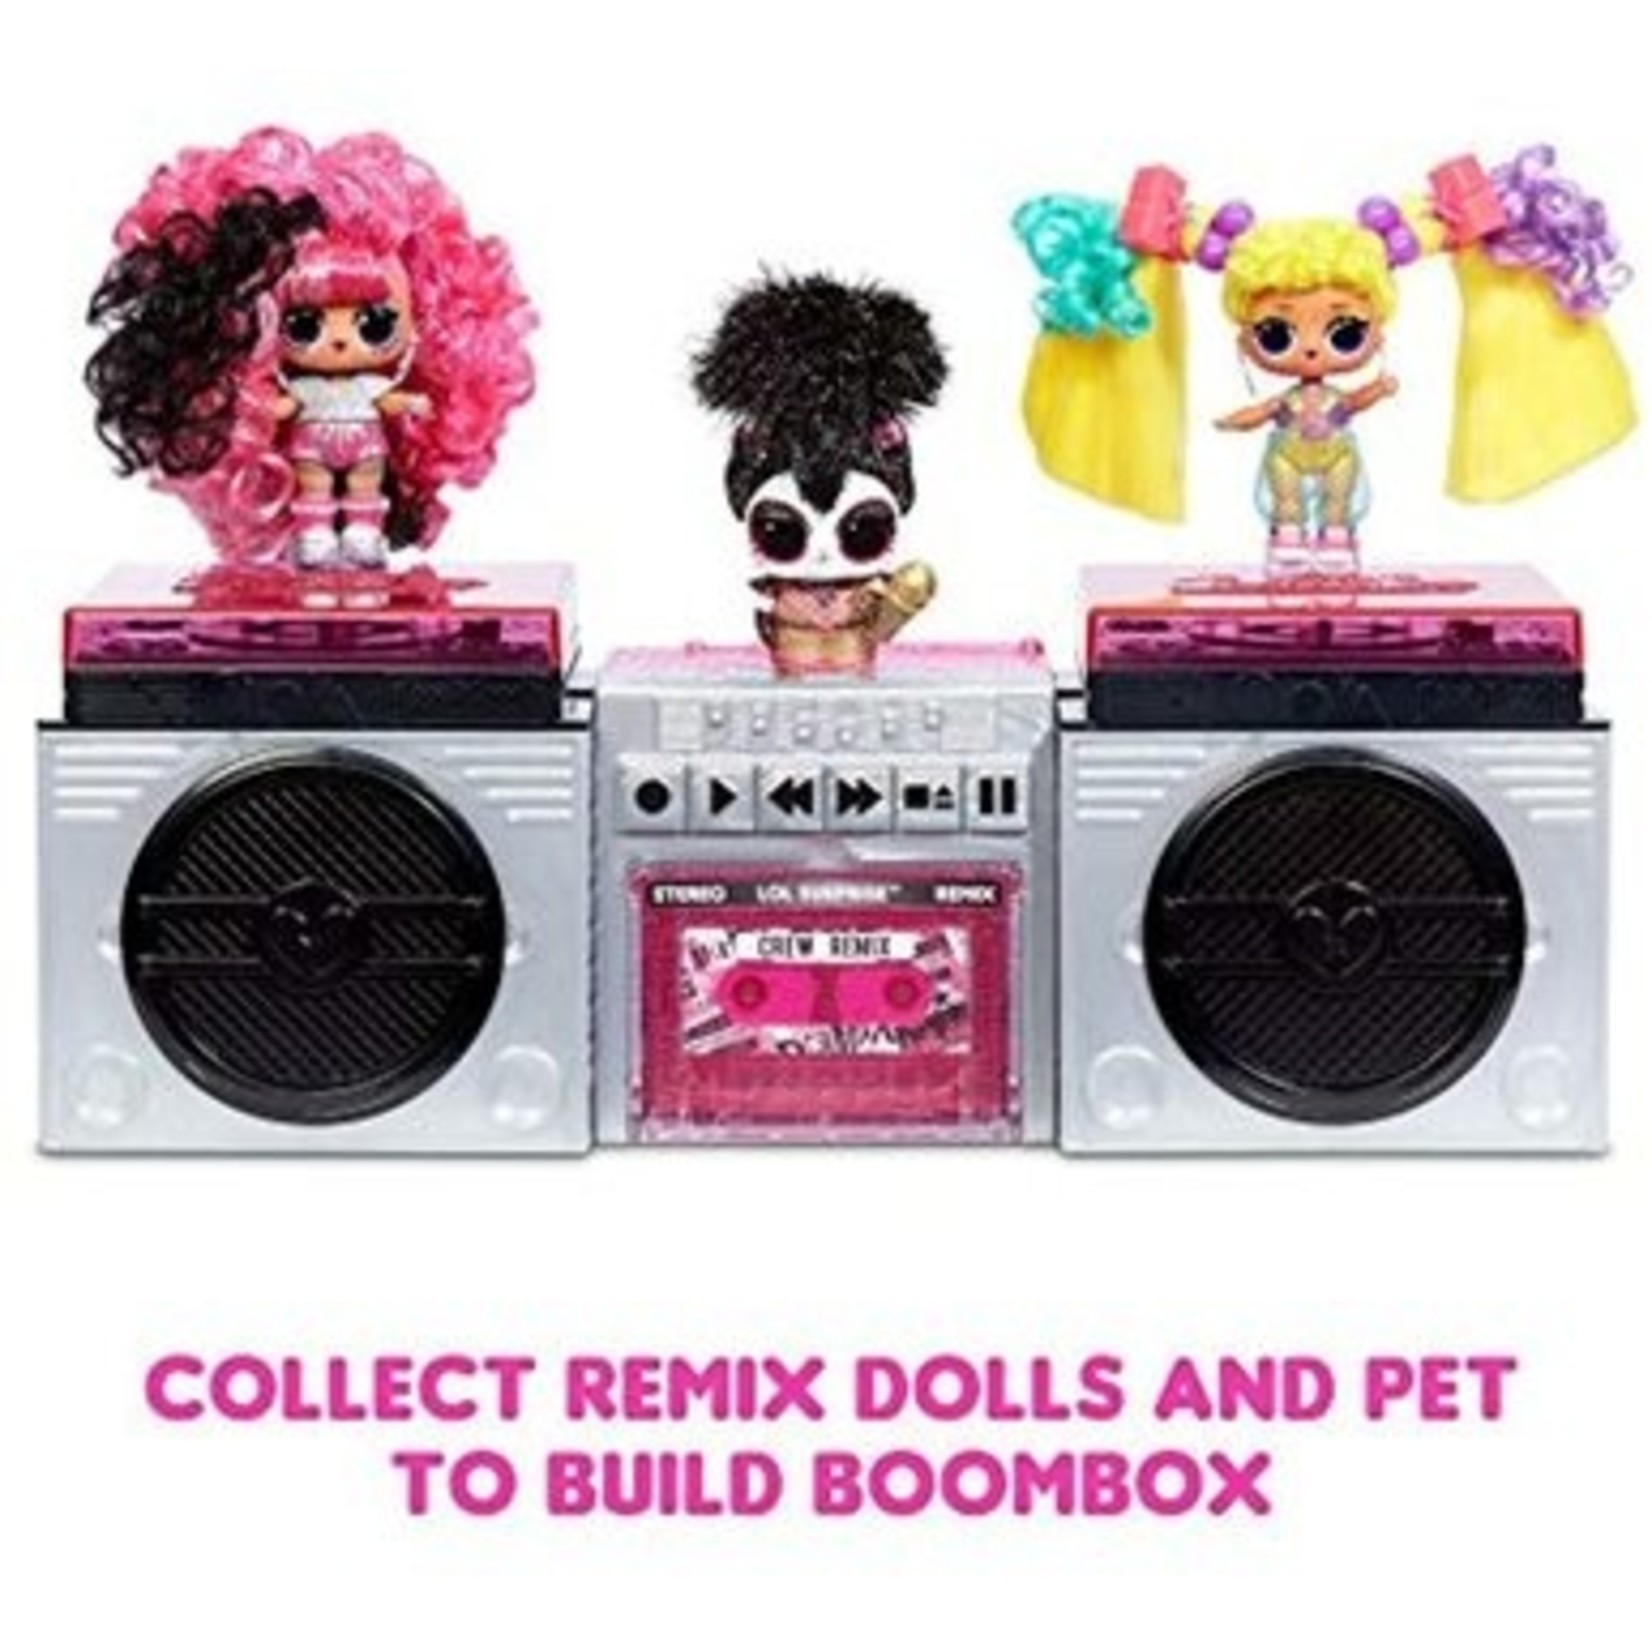 LOL Surprise Remix Hair Flip Dolls - 15 Surprises with Hair Reveal & Music